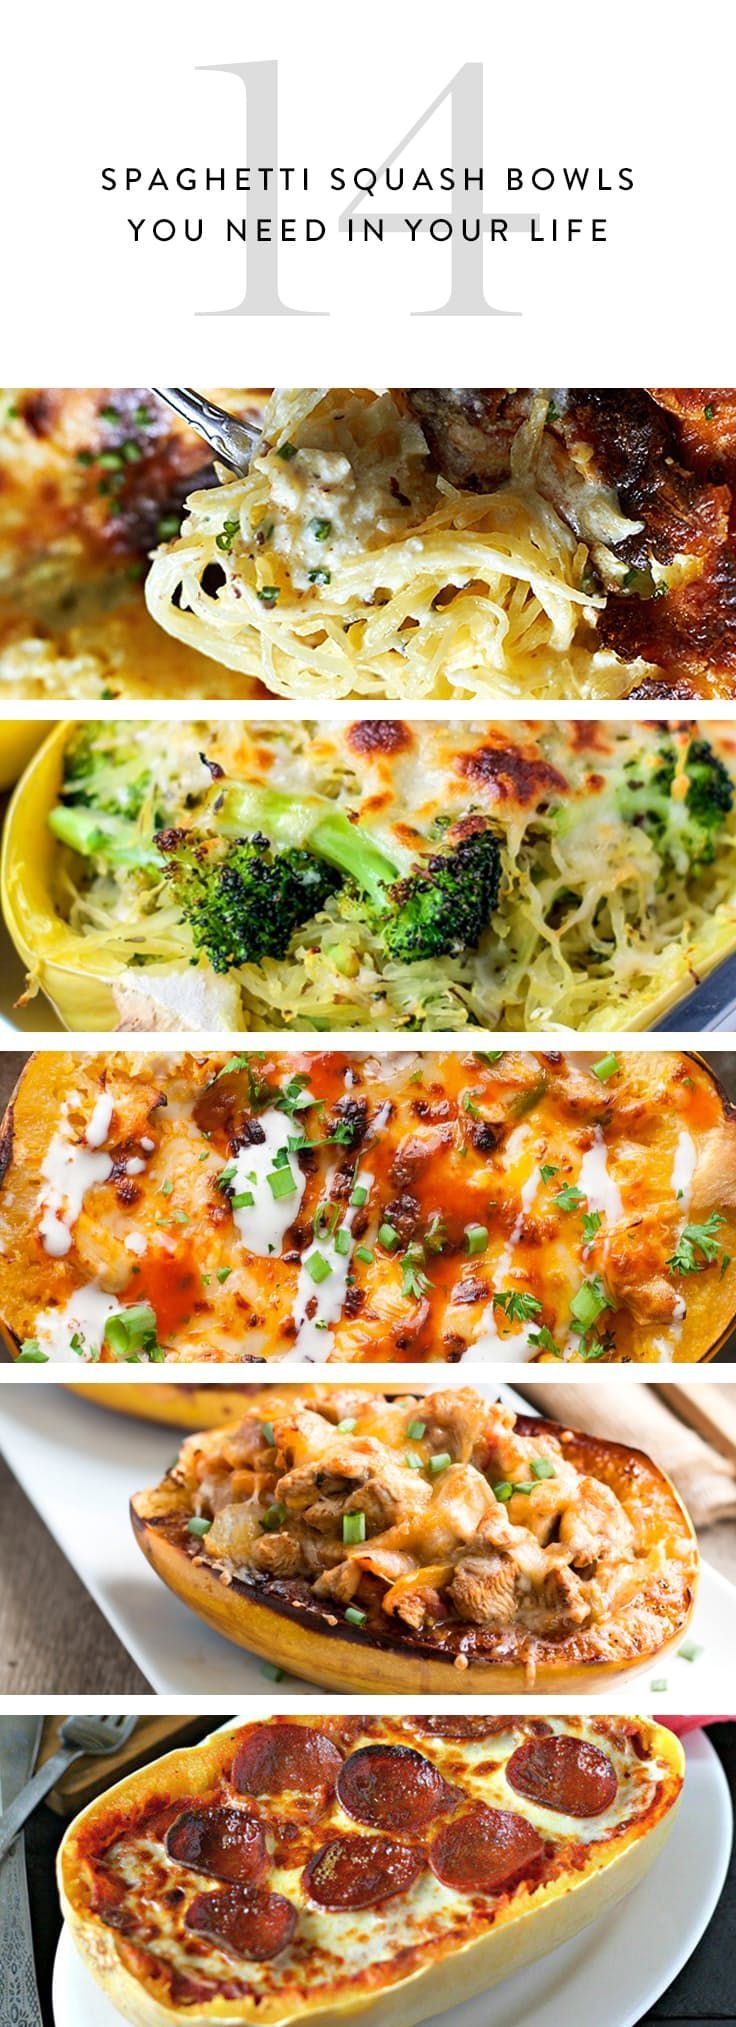 14 Spaghetti Squash Bowls You Need in Your Life via @PureWow